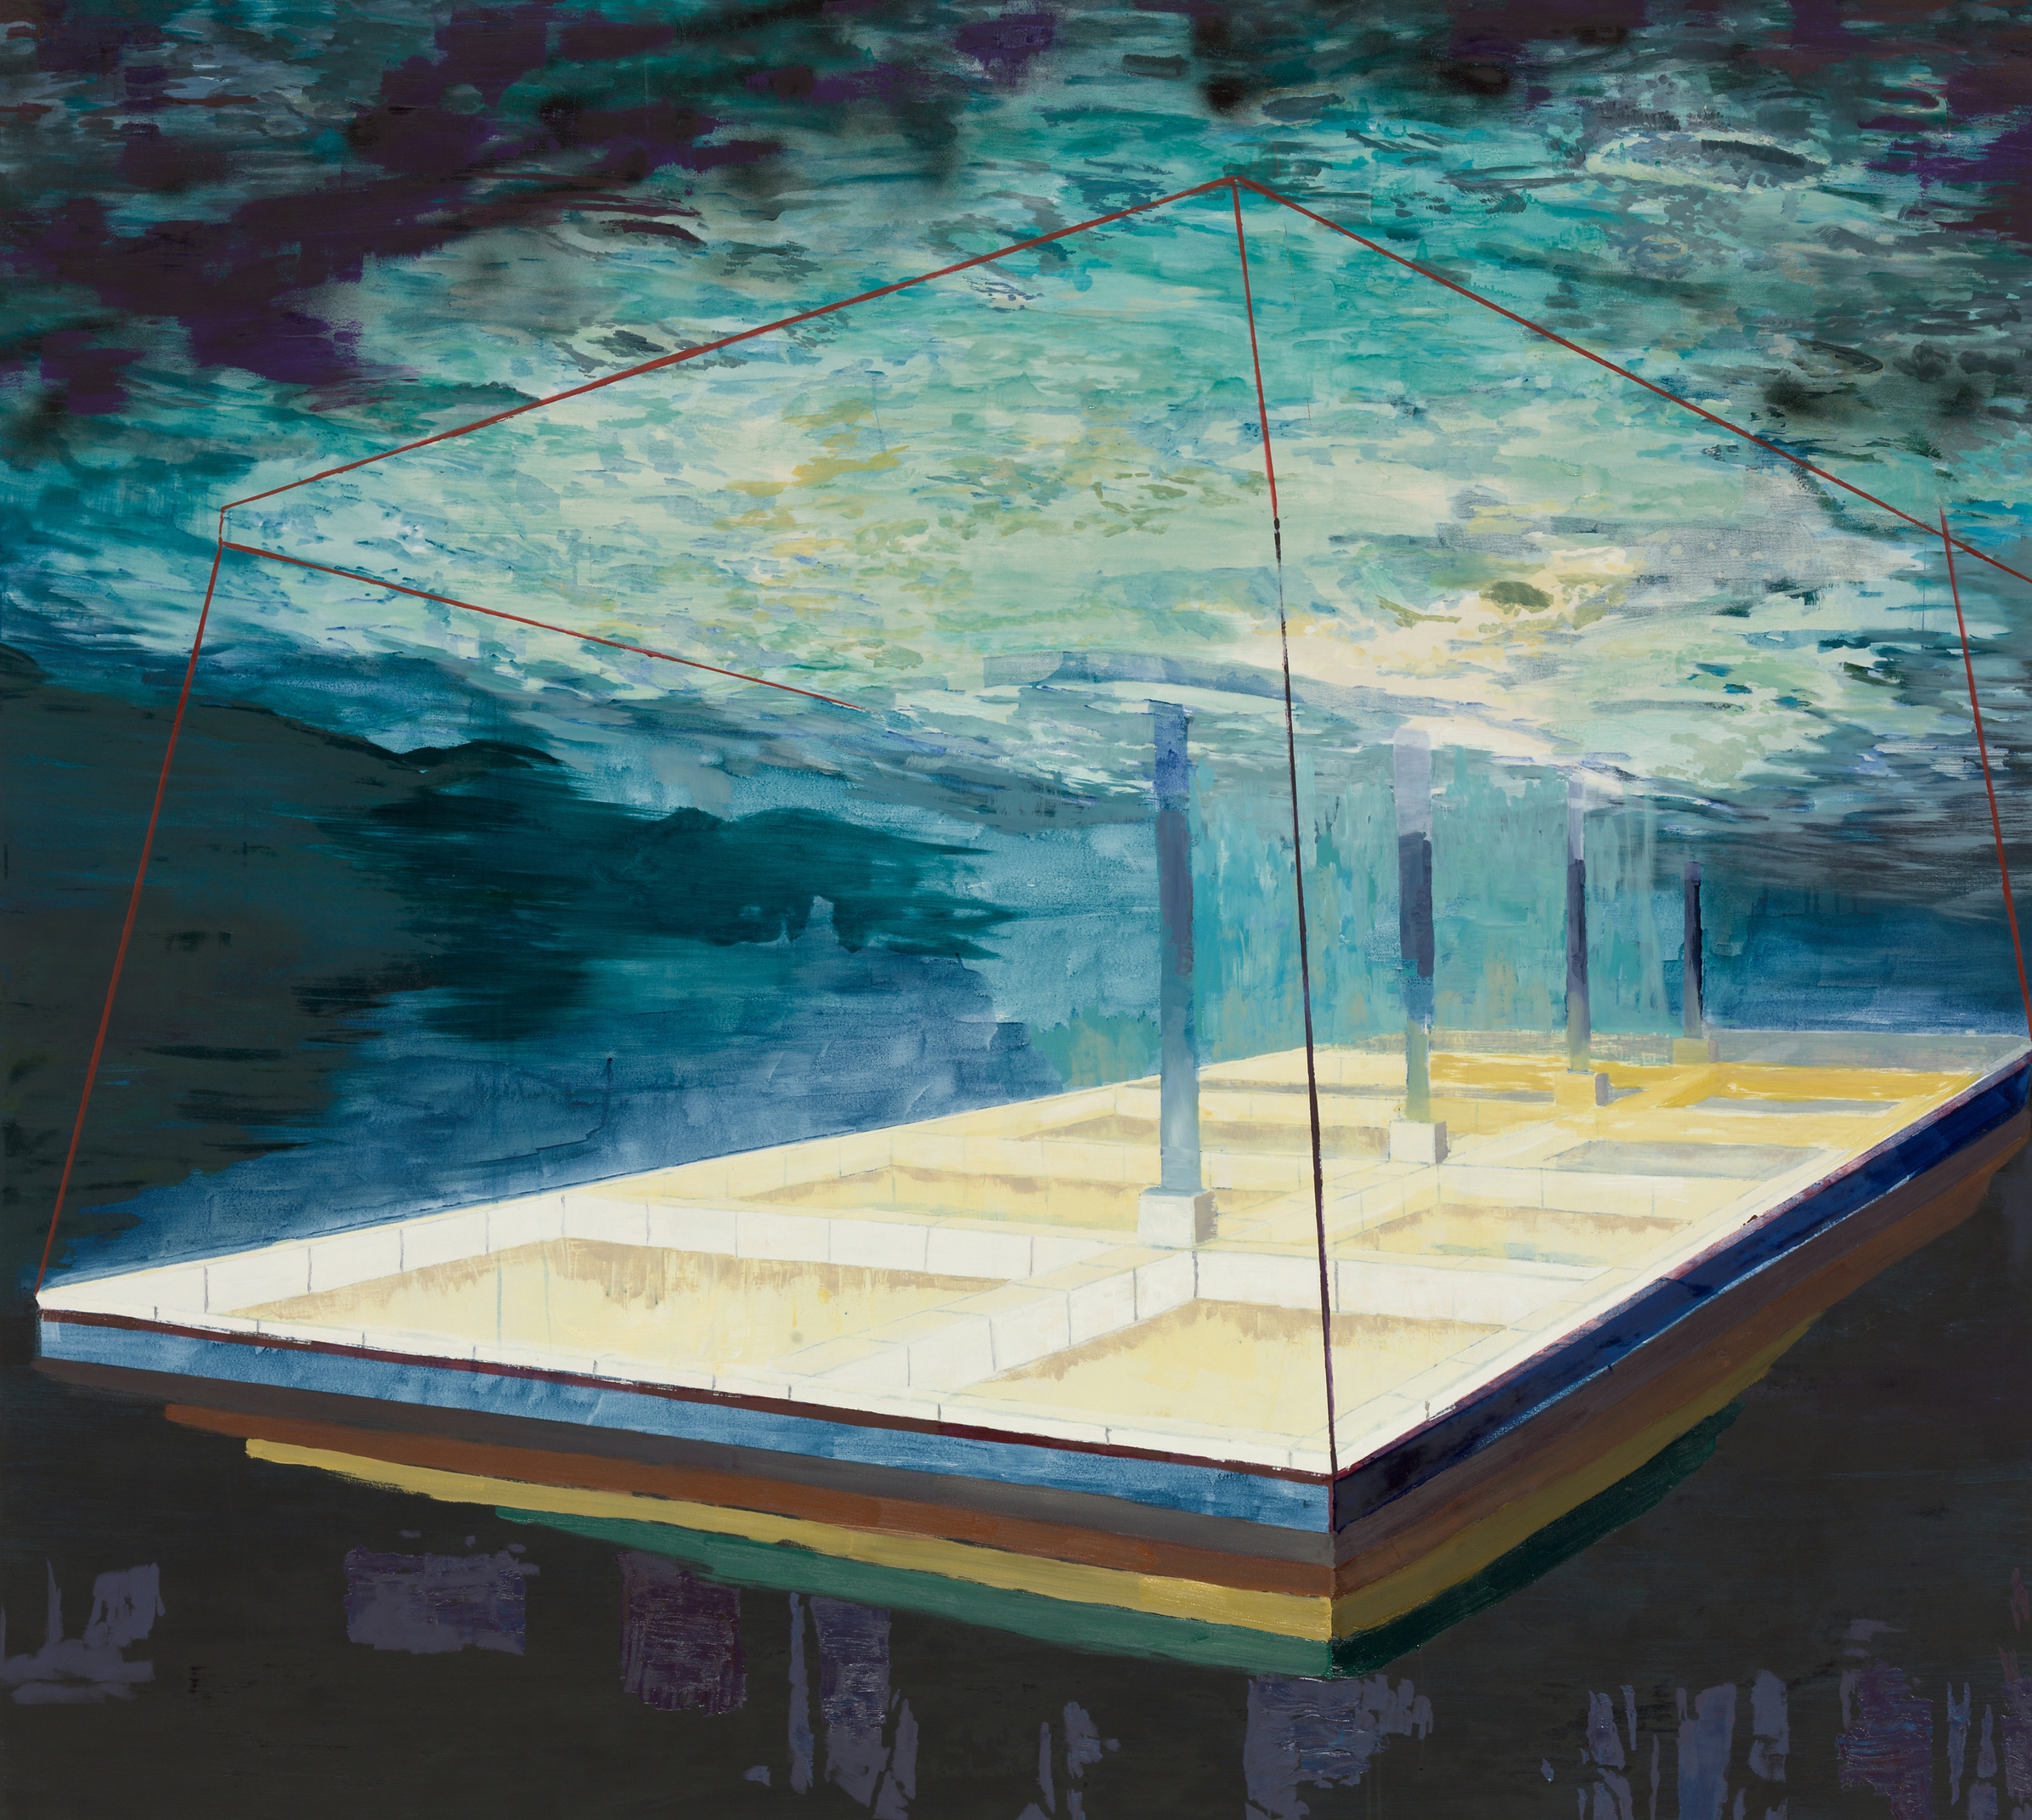 Zapf, 2009, 180 x 200 cm, oil on canvas